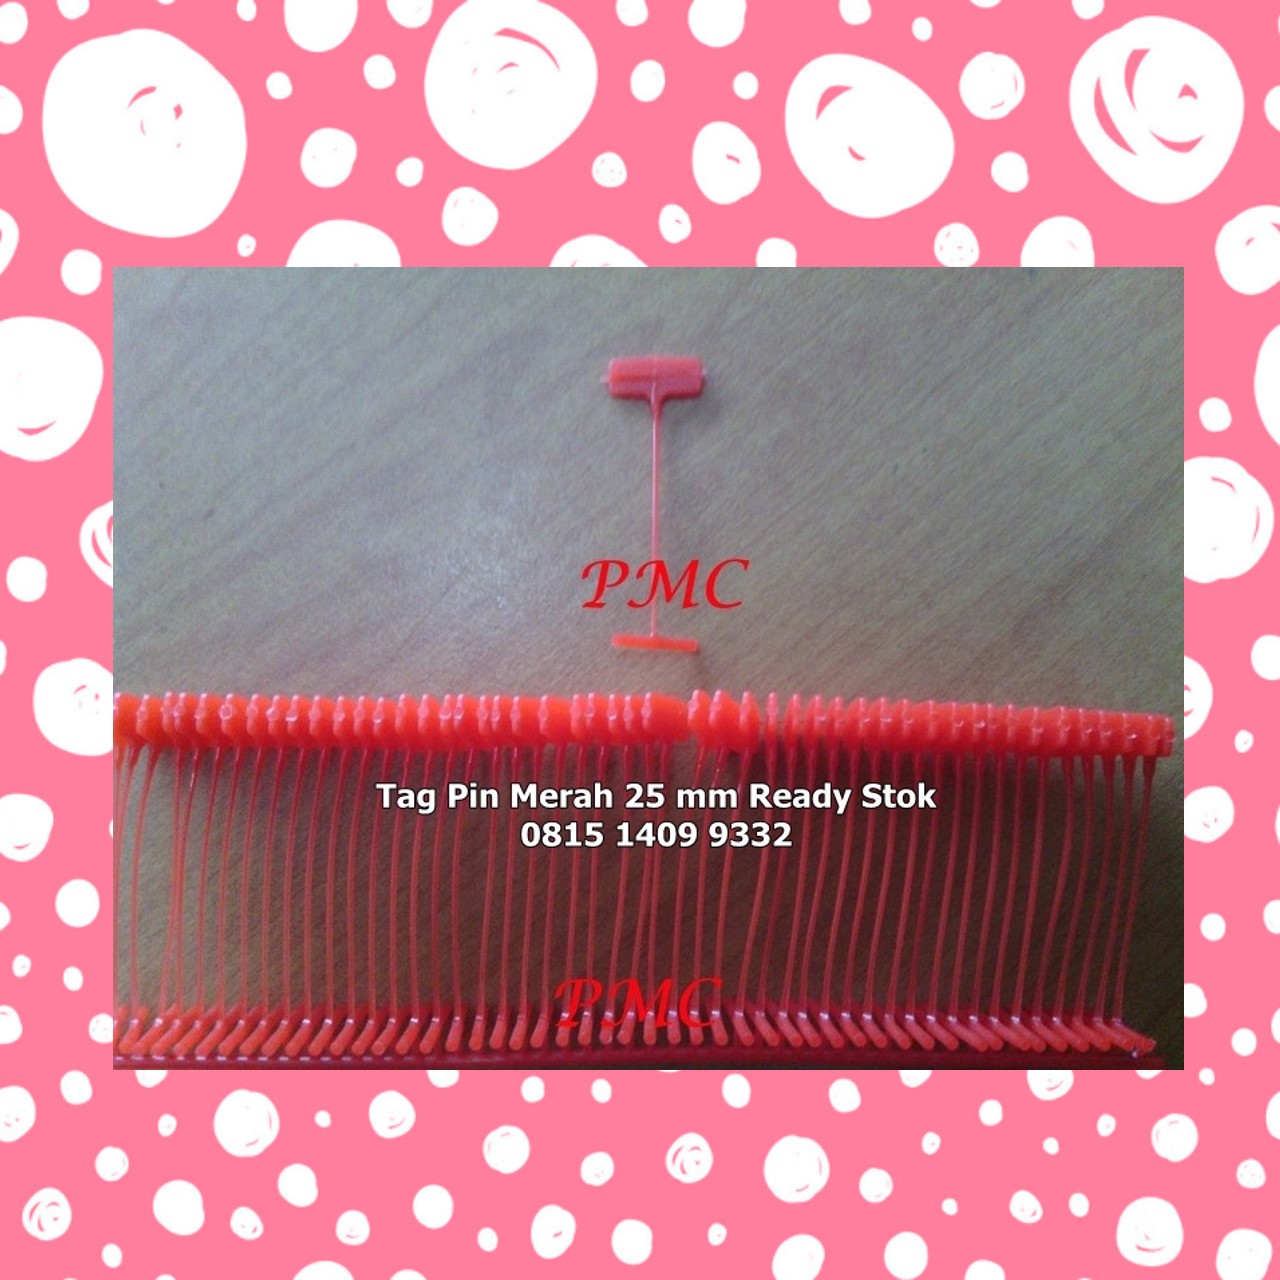 Jual Tag Pin ukuran 25mm warna Merah di Jakarta Pusat